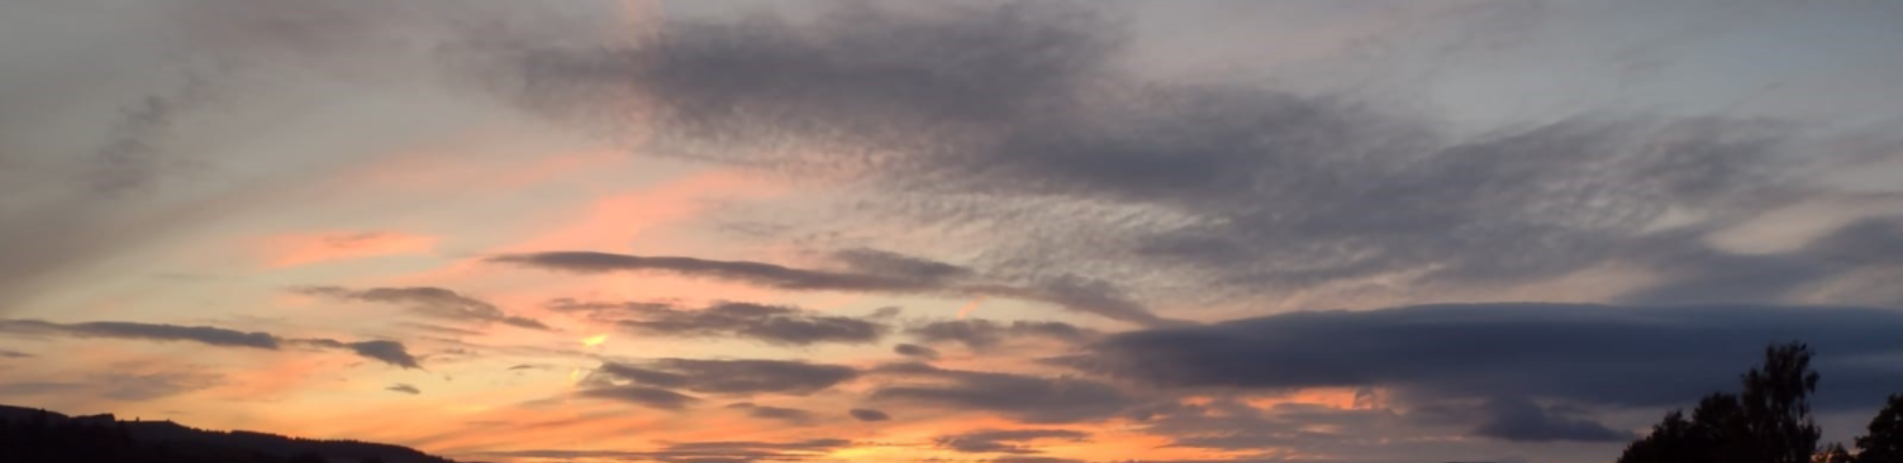 sunset-over-loch-lomond